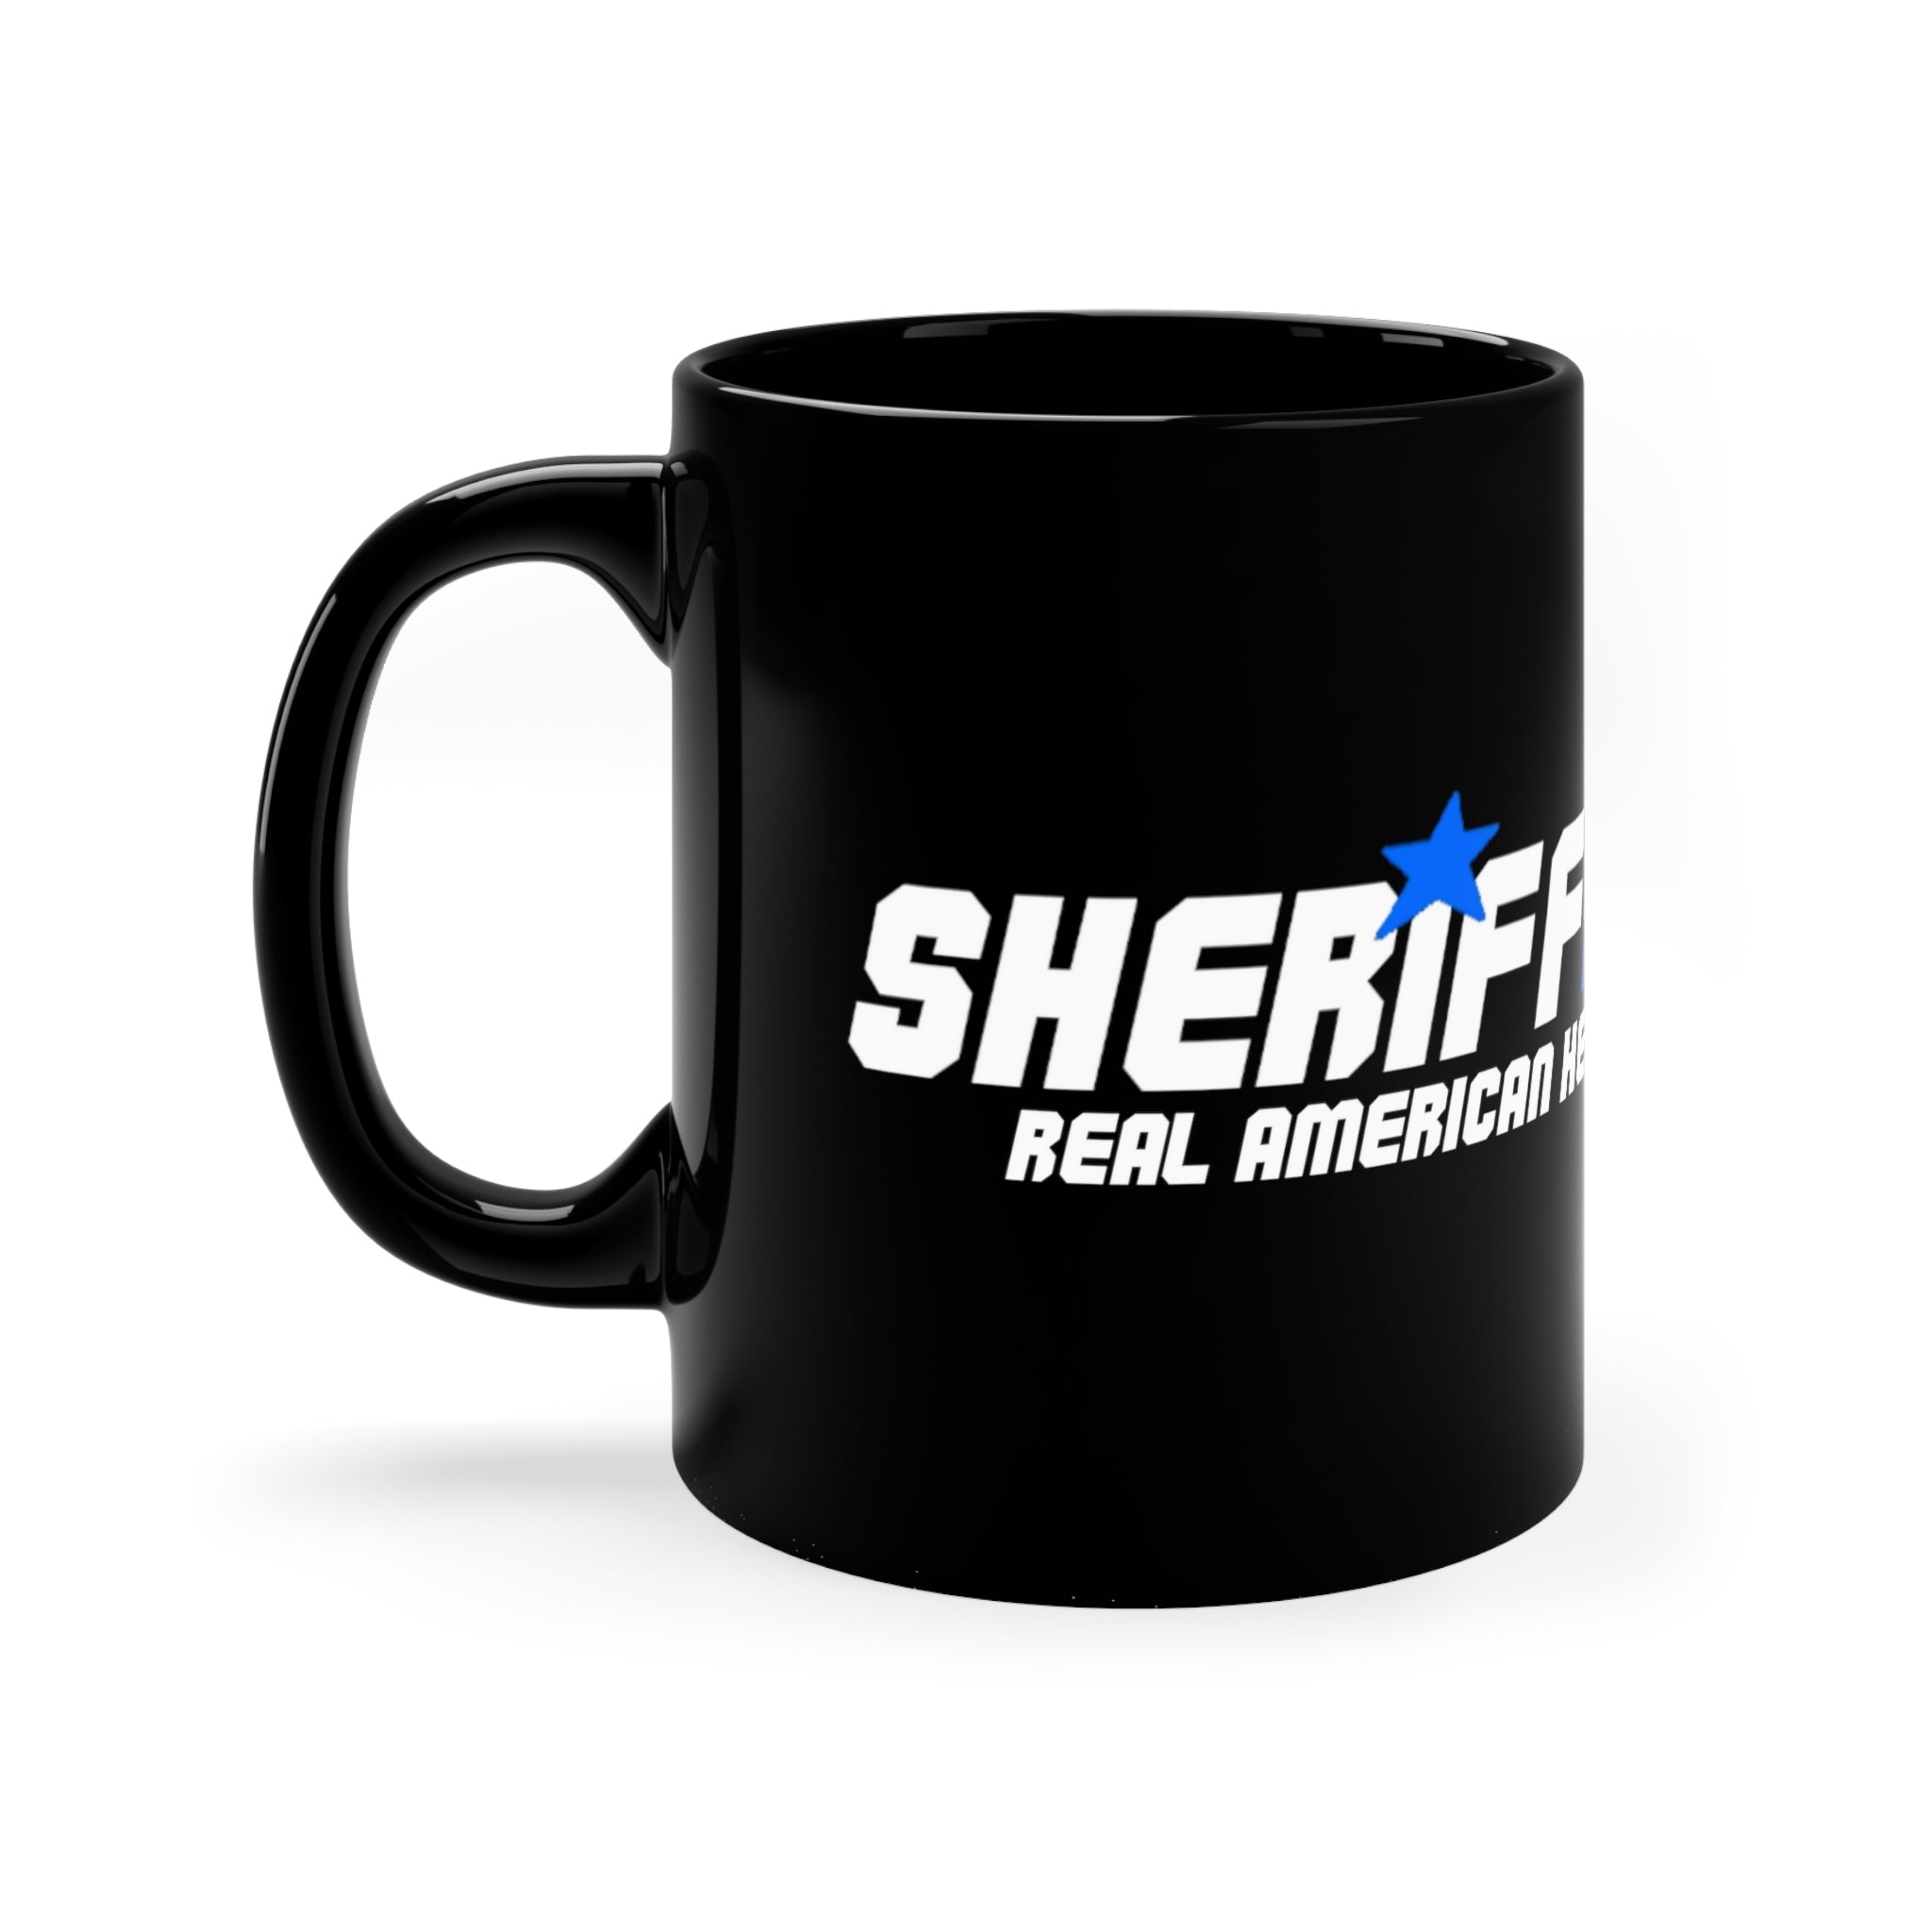 Black mug 11oz - Sheriff "Real American Heroes"